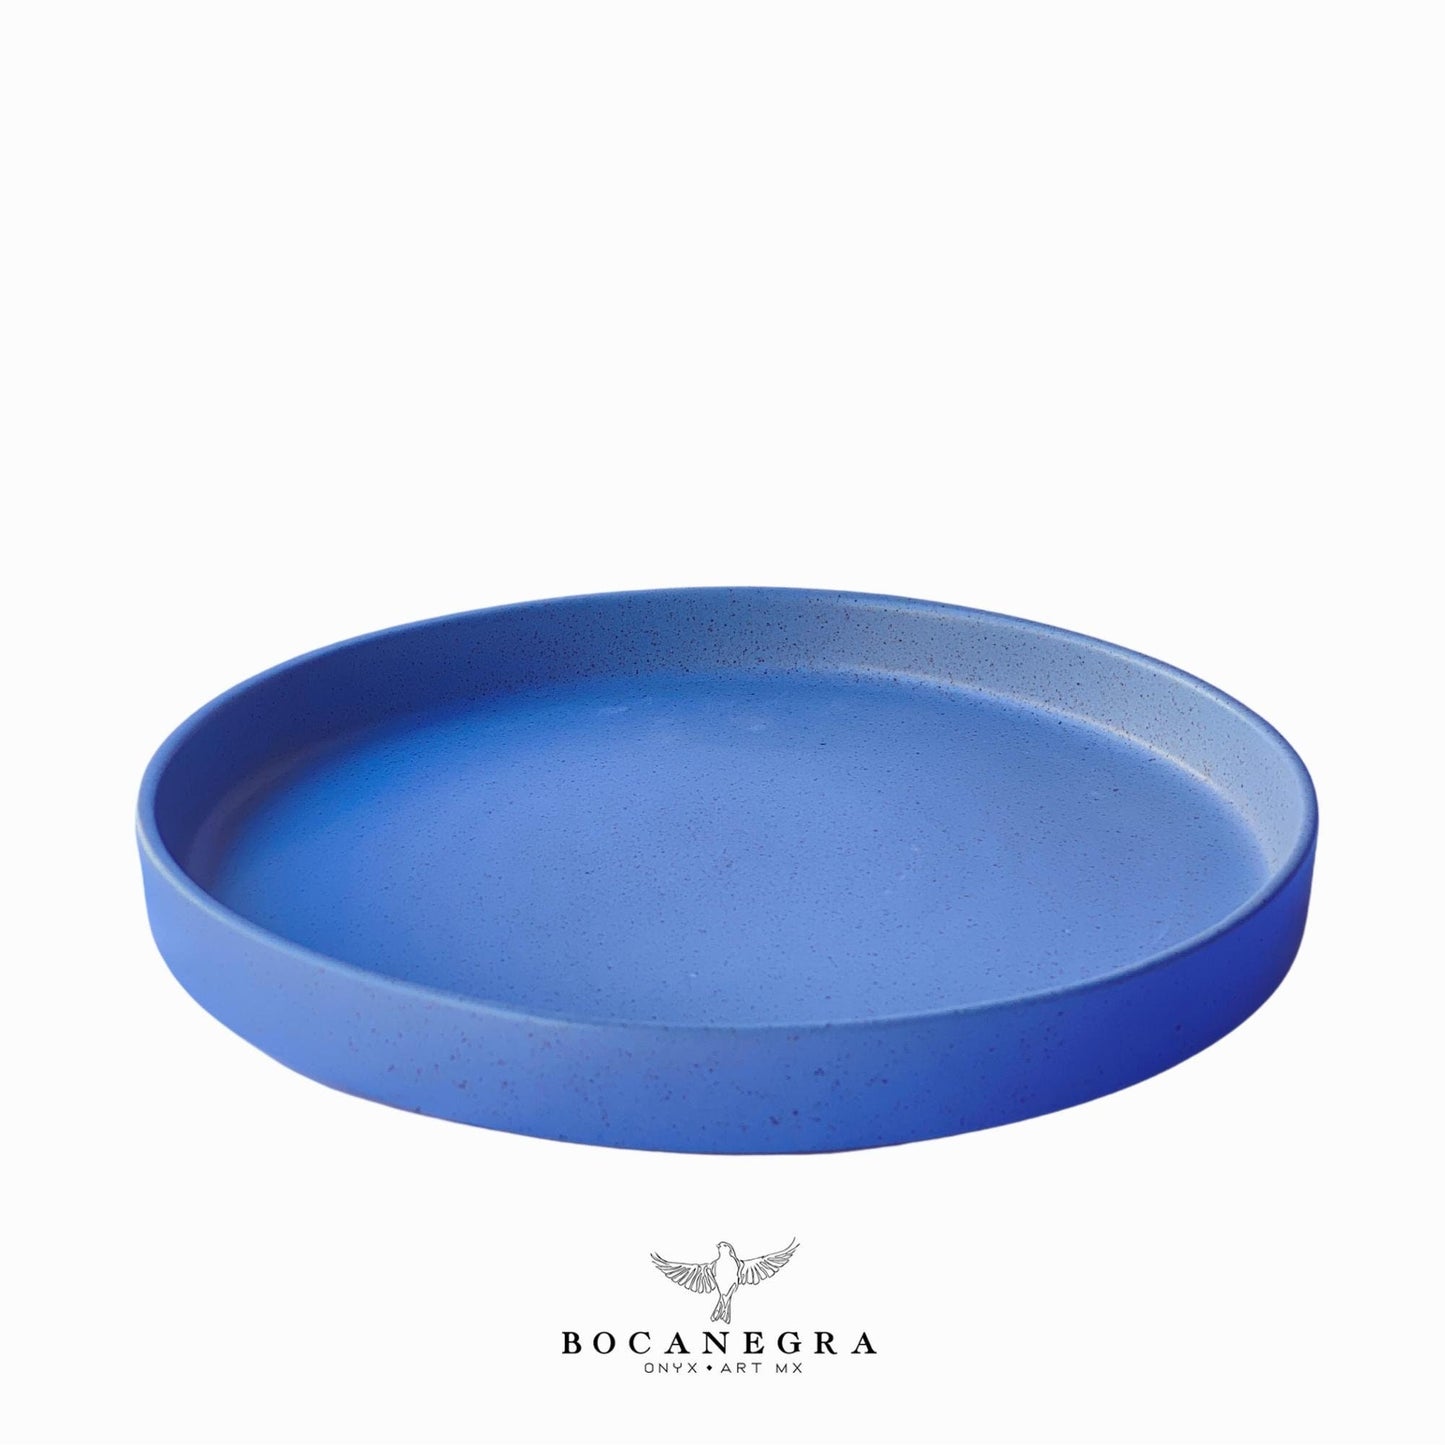 Handmade ceramic dinnerware set - Blue Ceramic tableware (5 piece set)